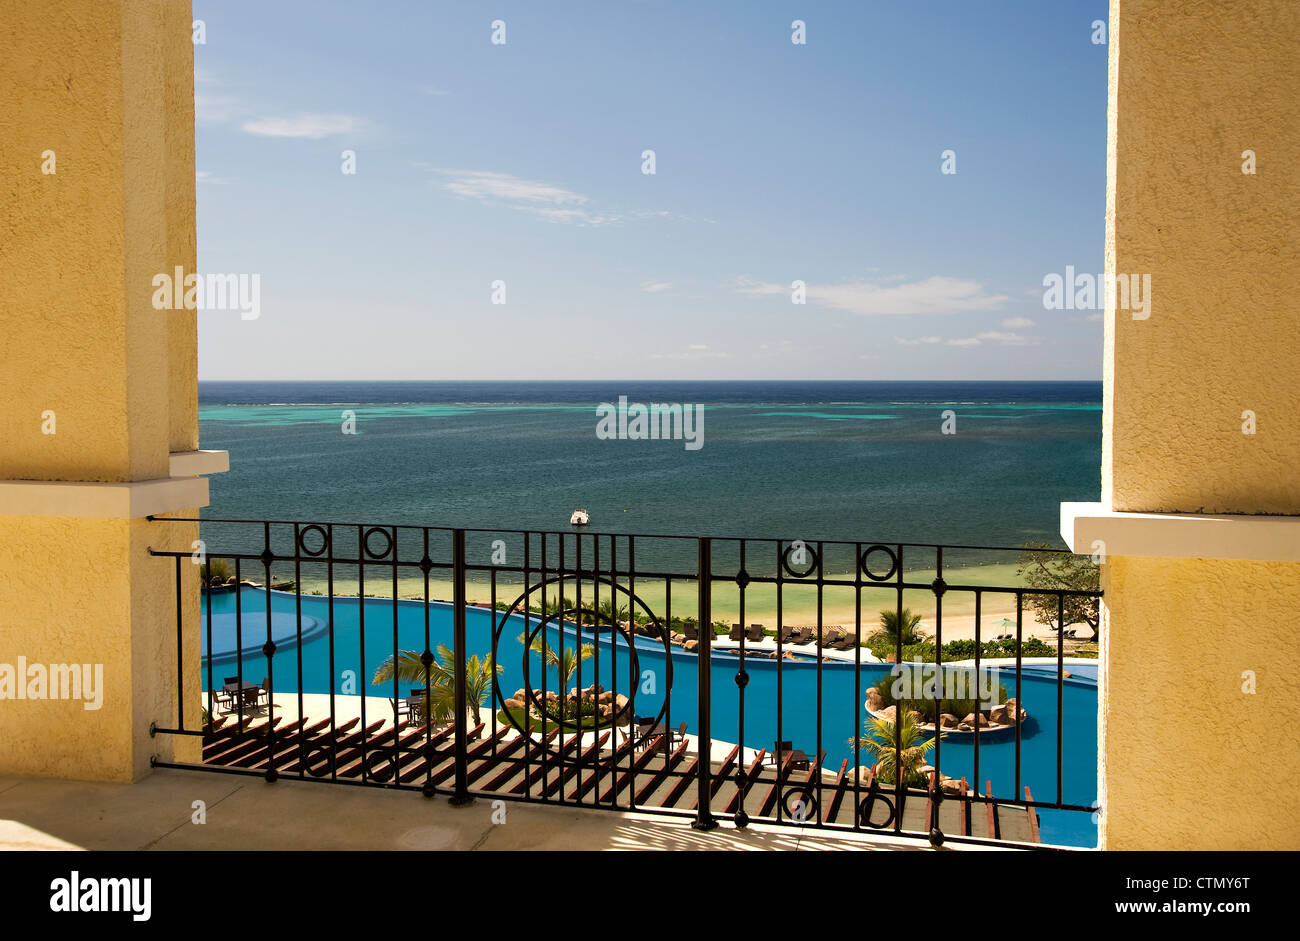 Pristine Bay Resort in Roatan, Honduras Stock Photo